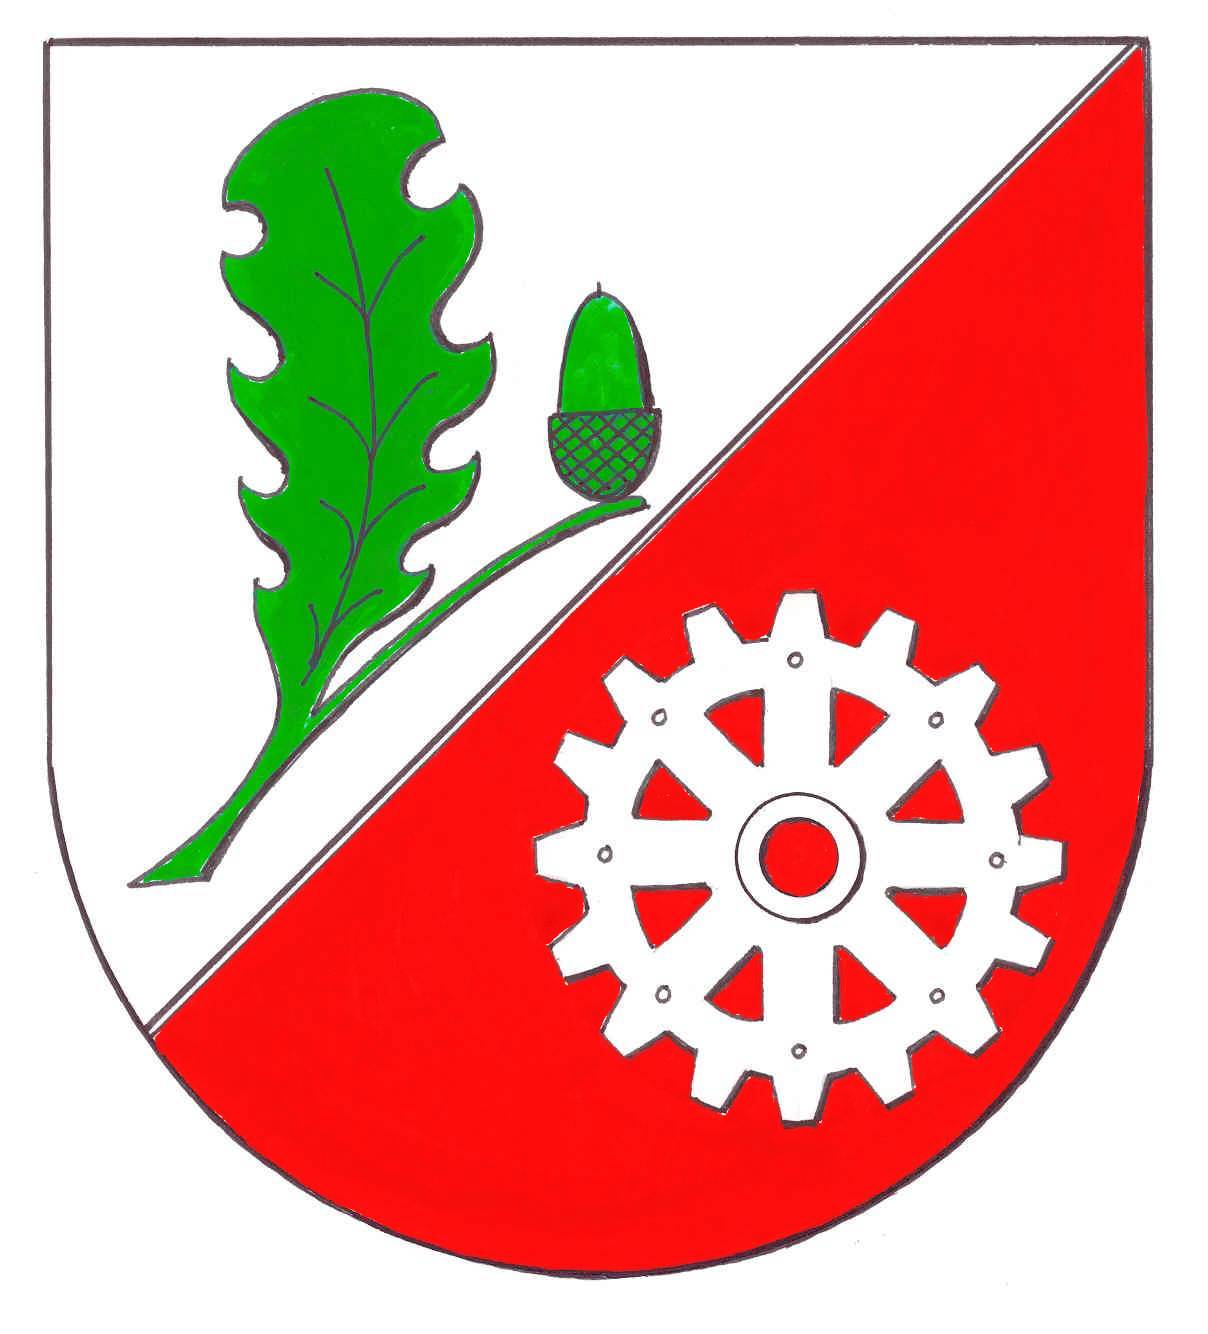 Wappen Gemeinde Lohe-Rickelshof, Kreis Dithmarschen